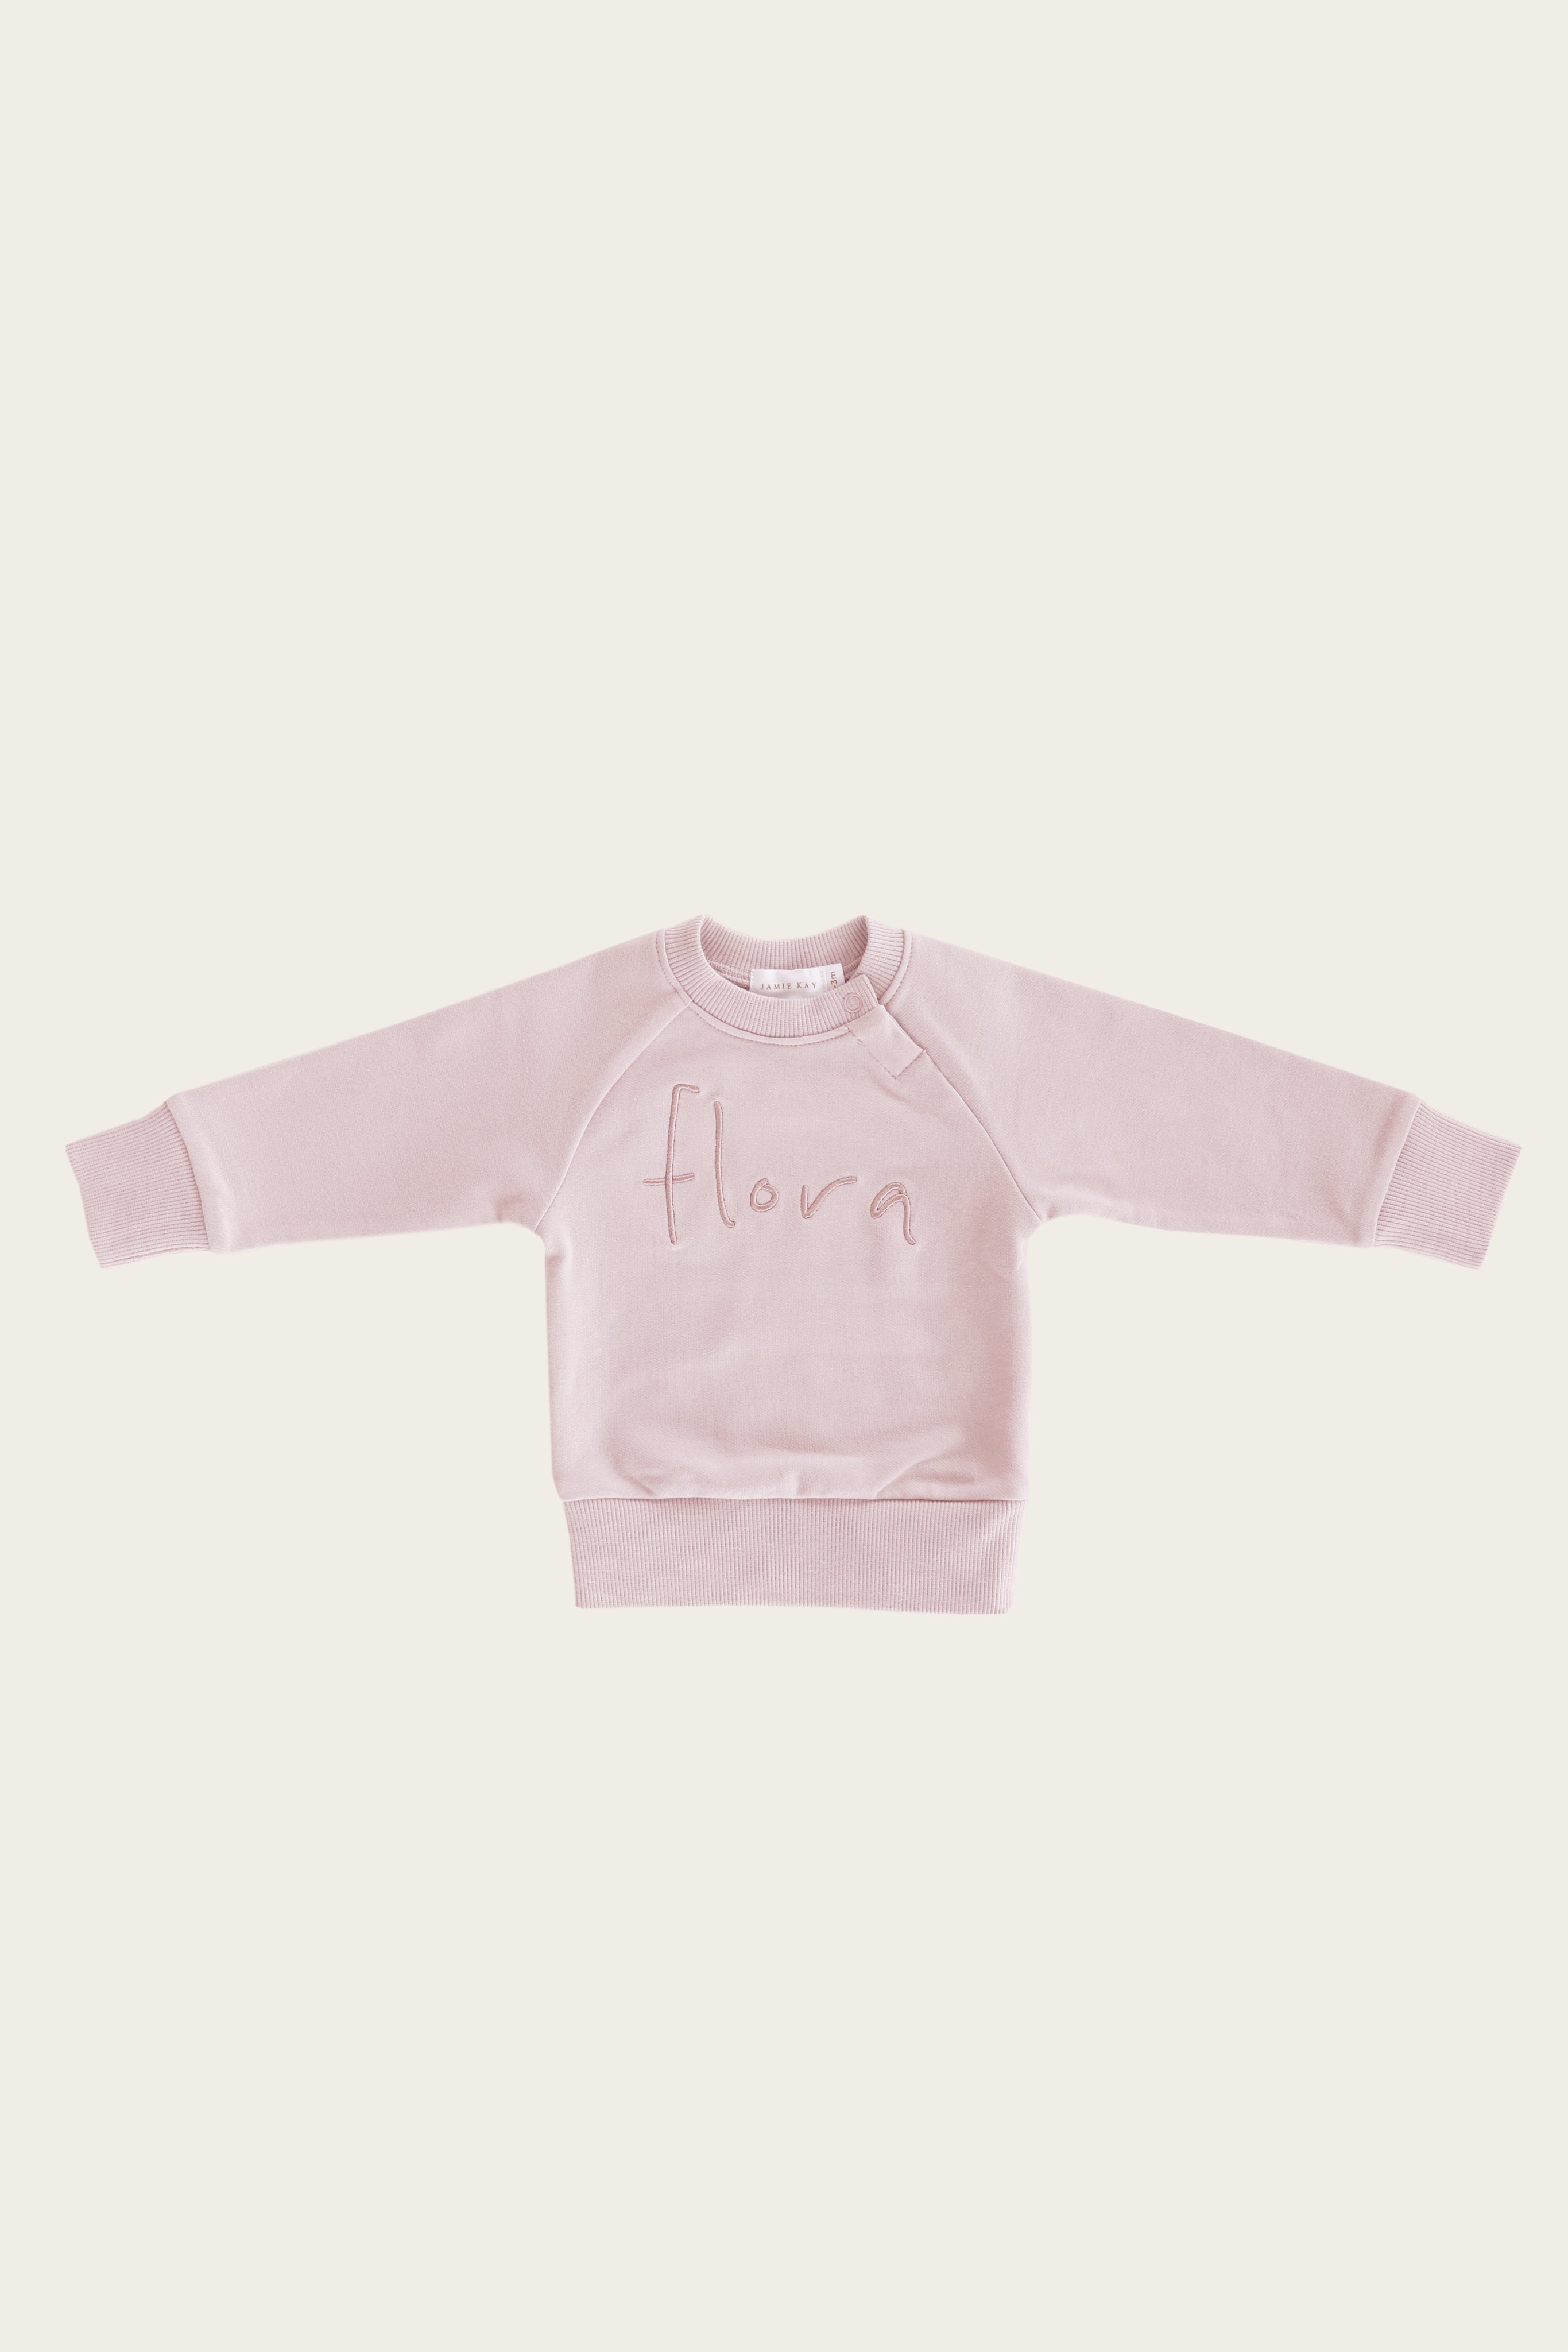 Flora Sweatshirt - Old Rose